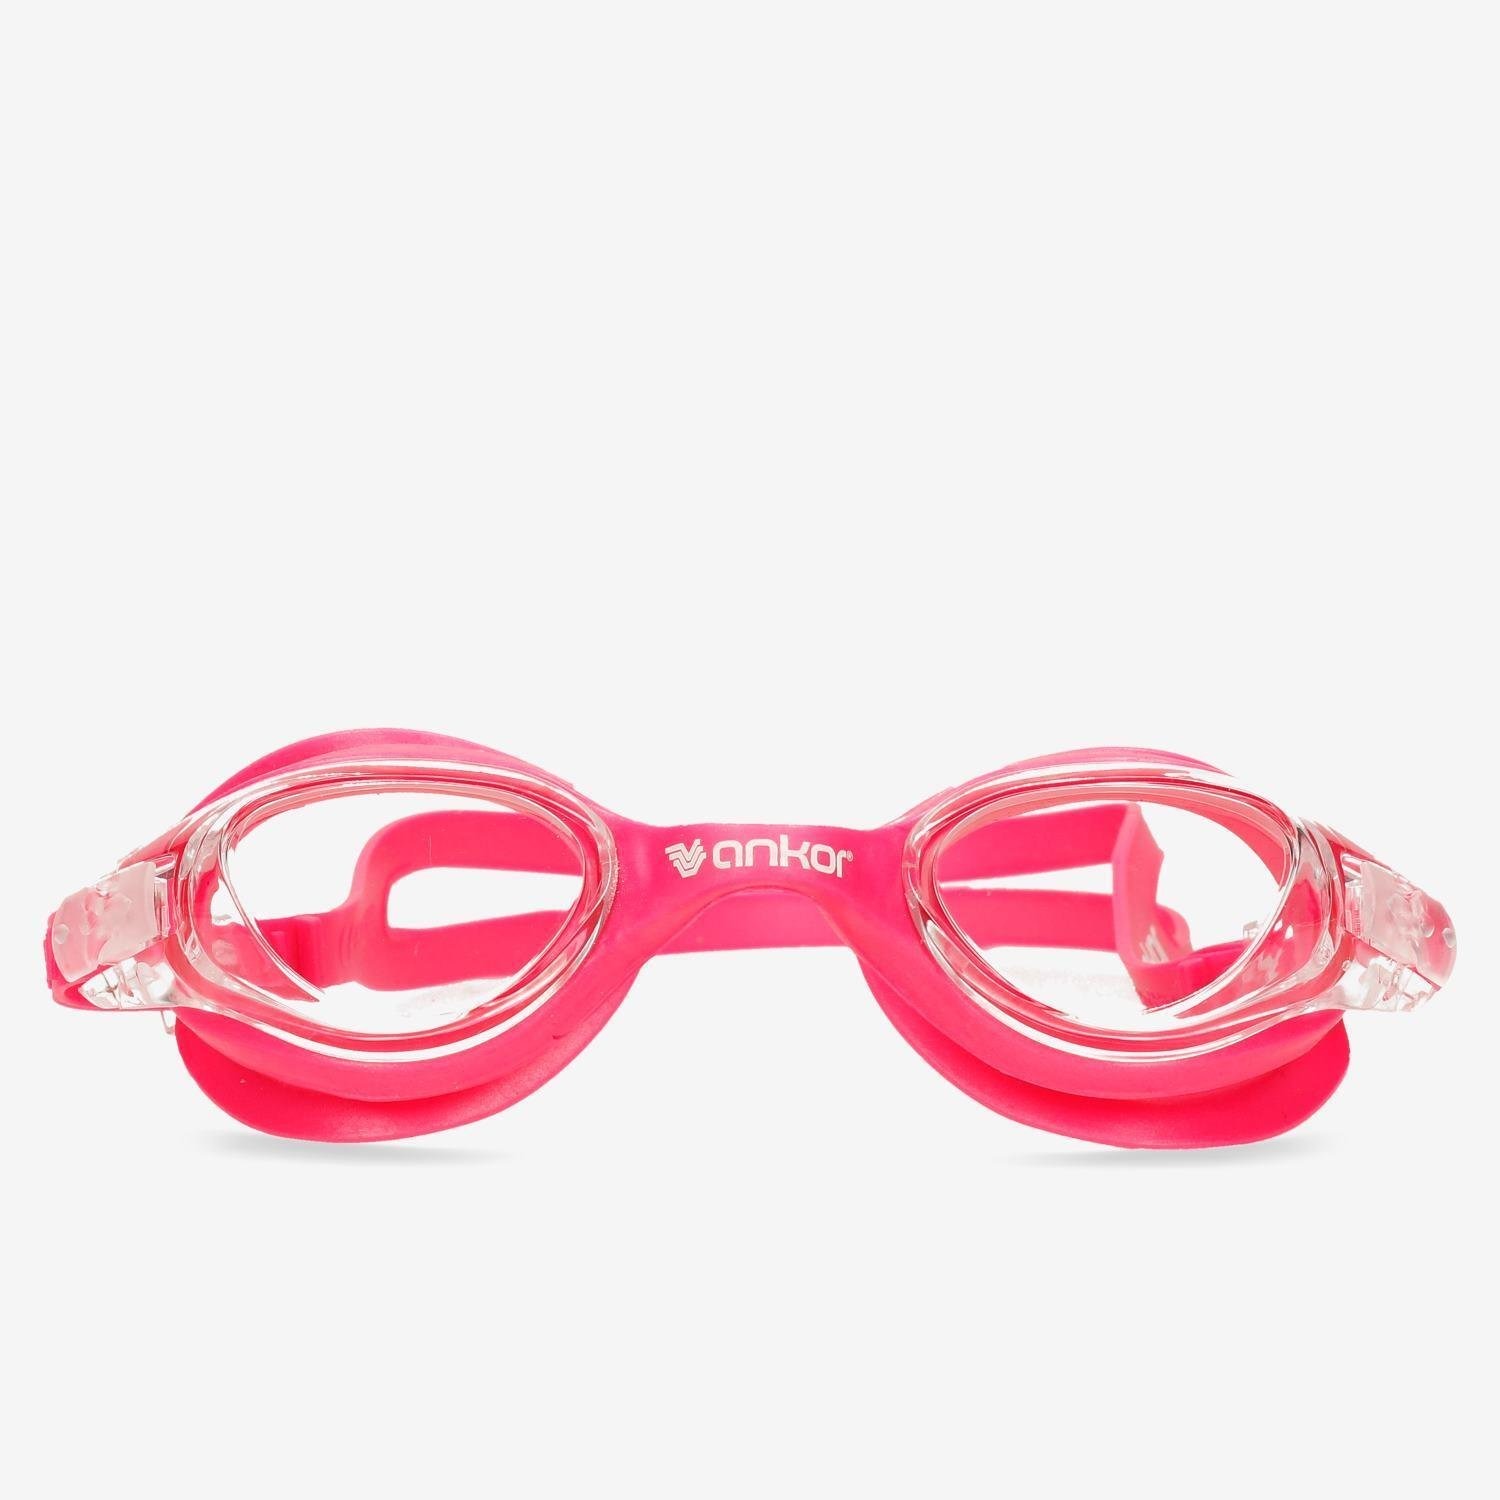 ANKOR Ankor marni swim-big duikbril roze kinderen